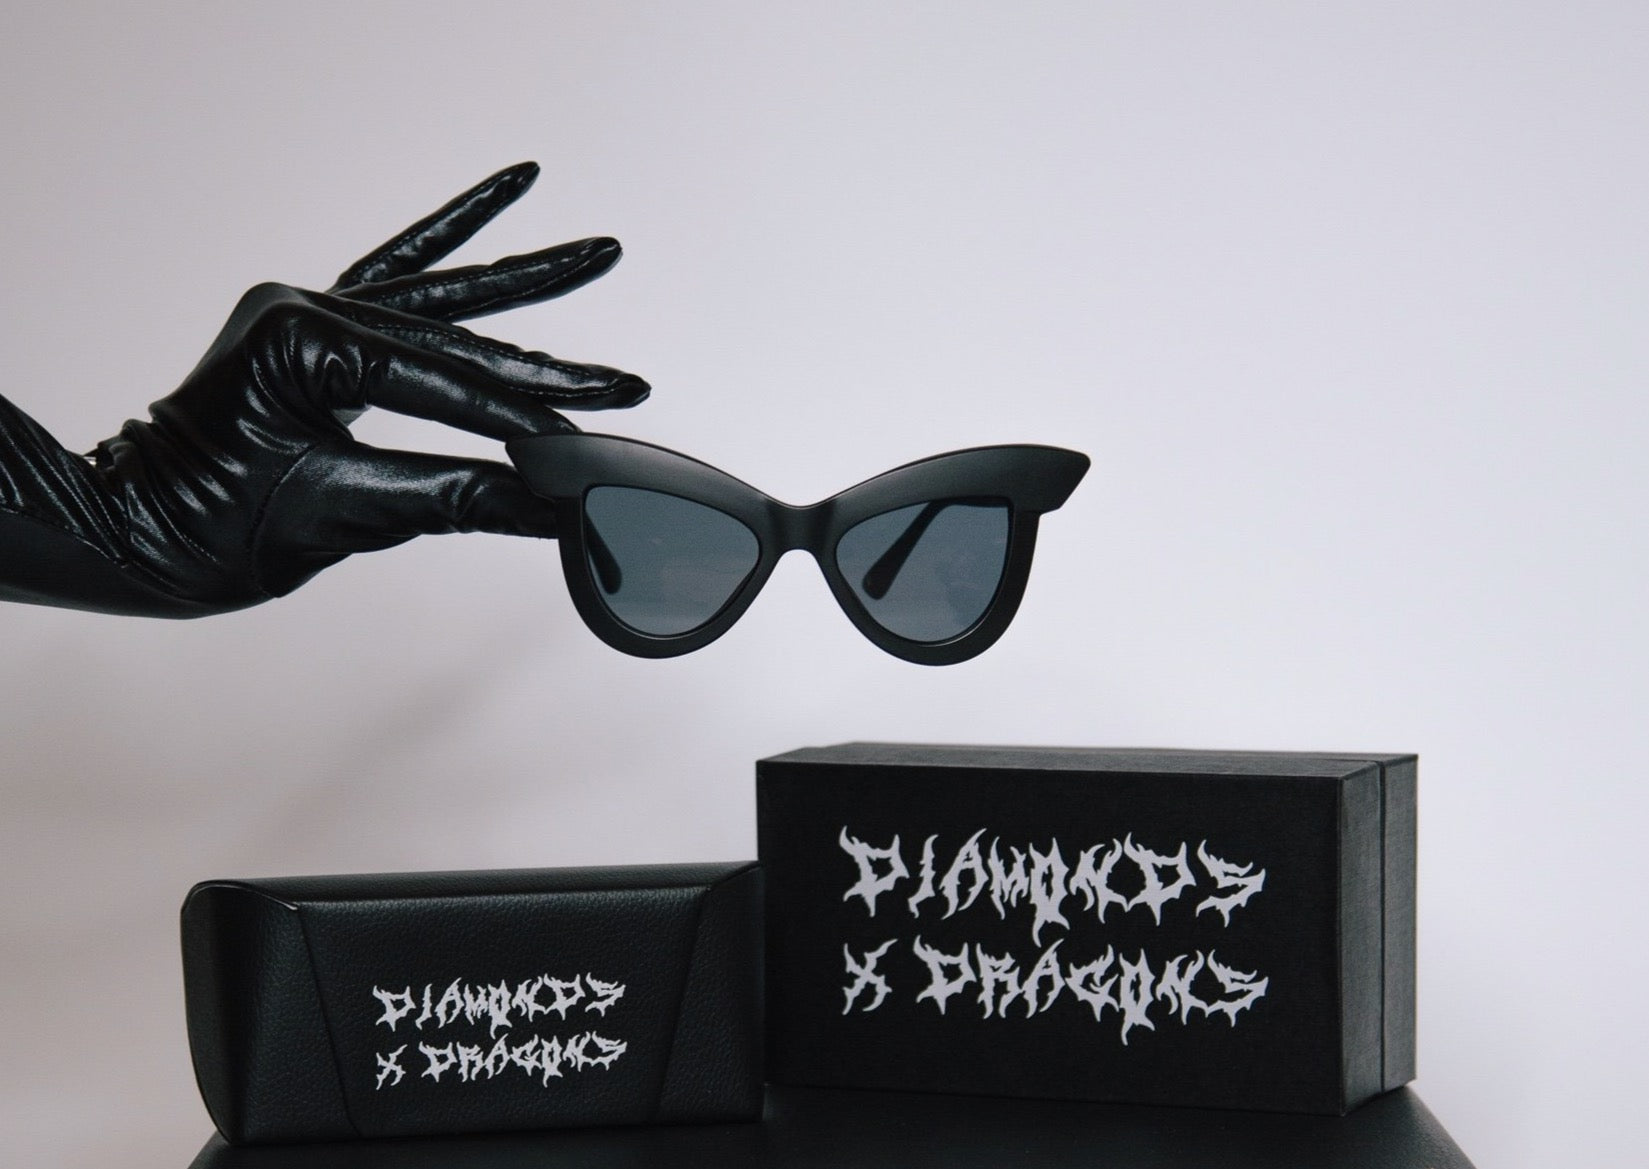 The 'Sphinx Eye' Sunglasses in Matte Black